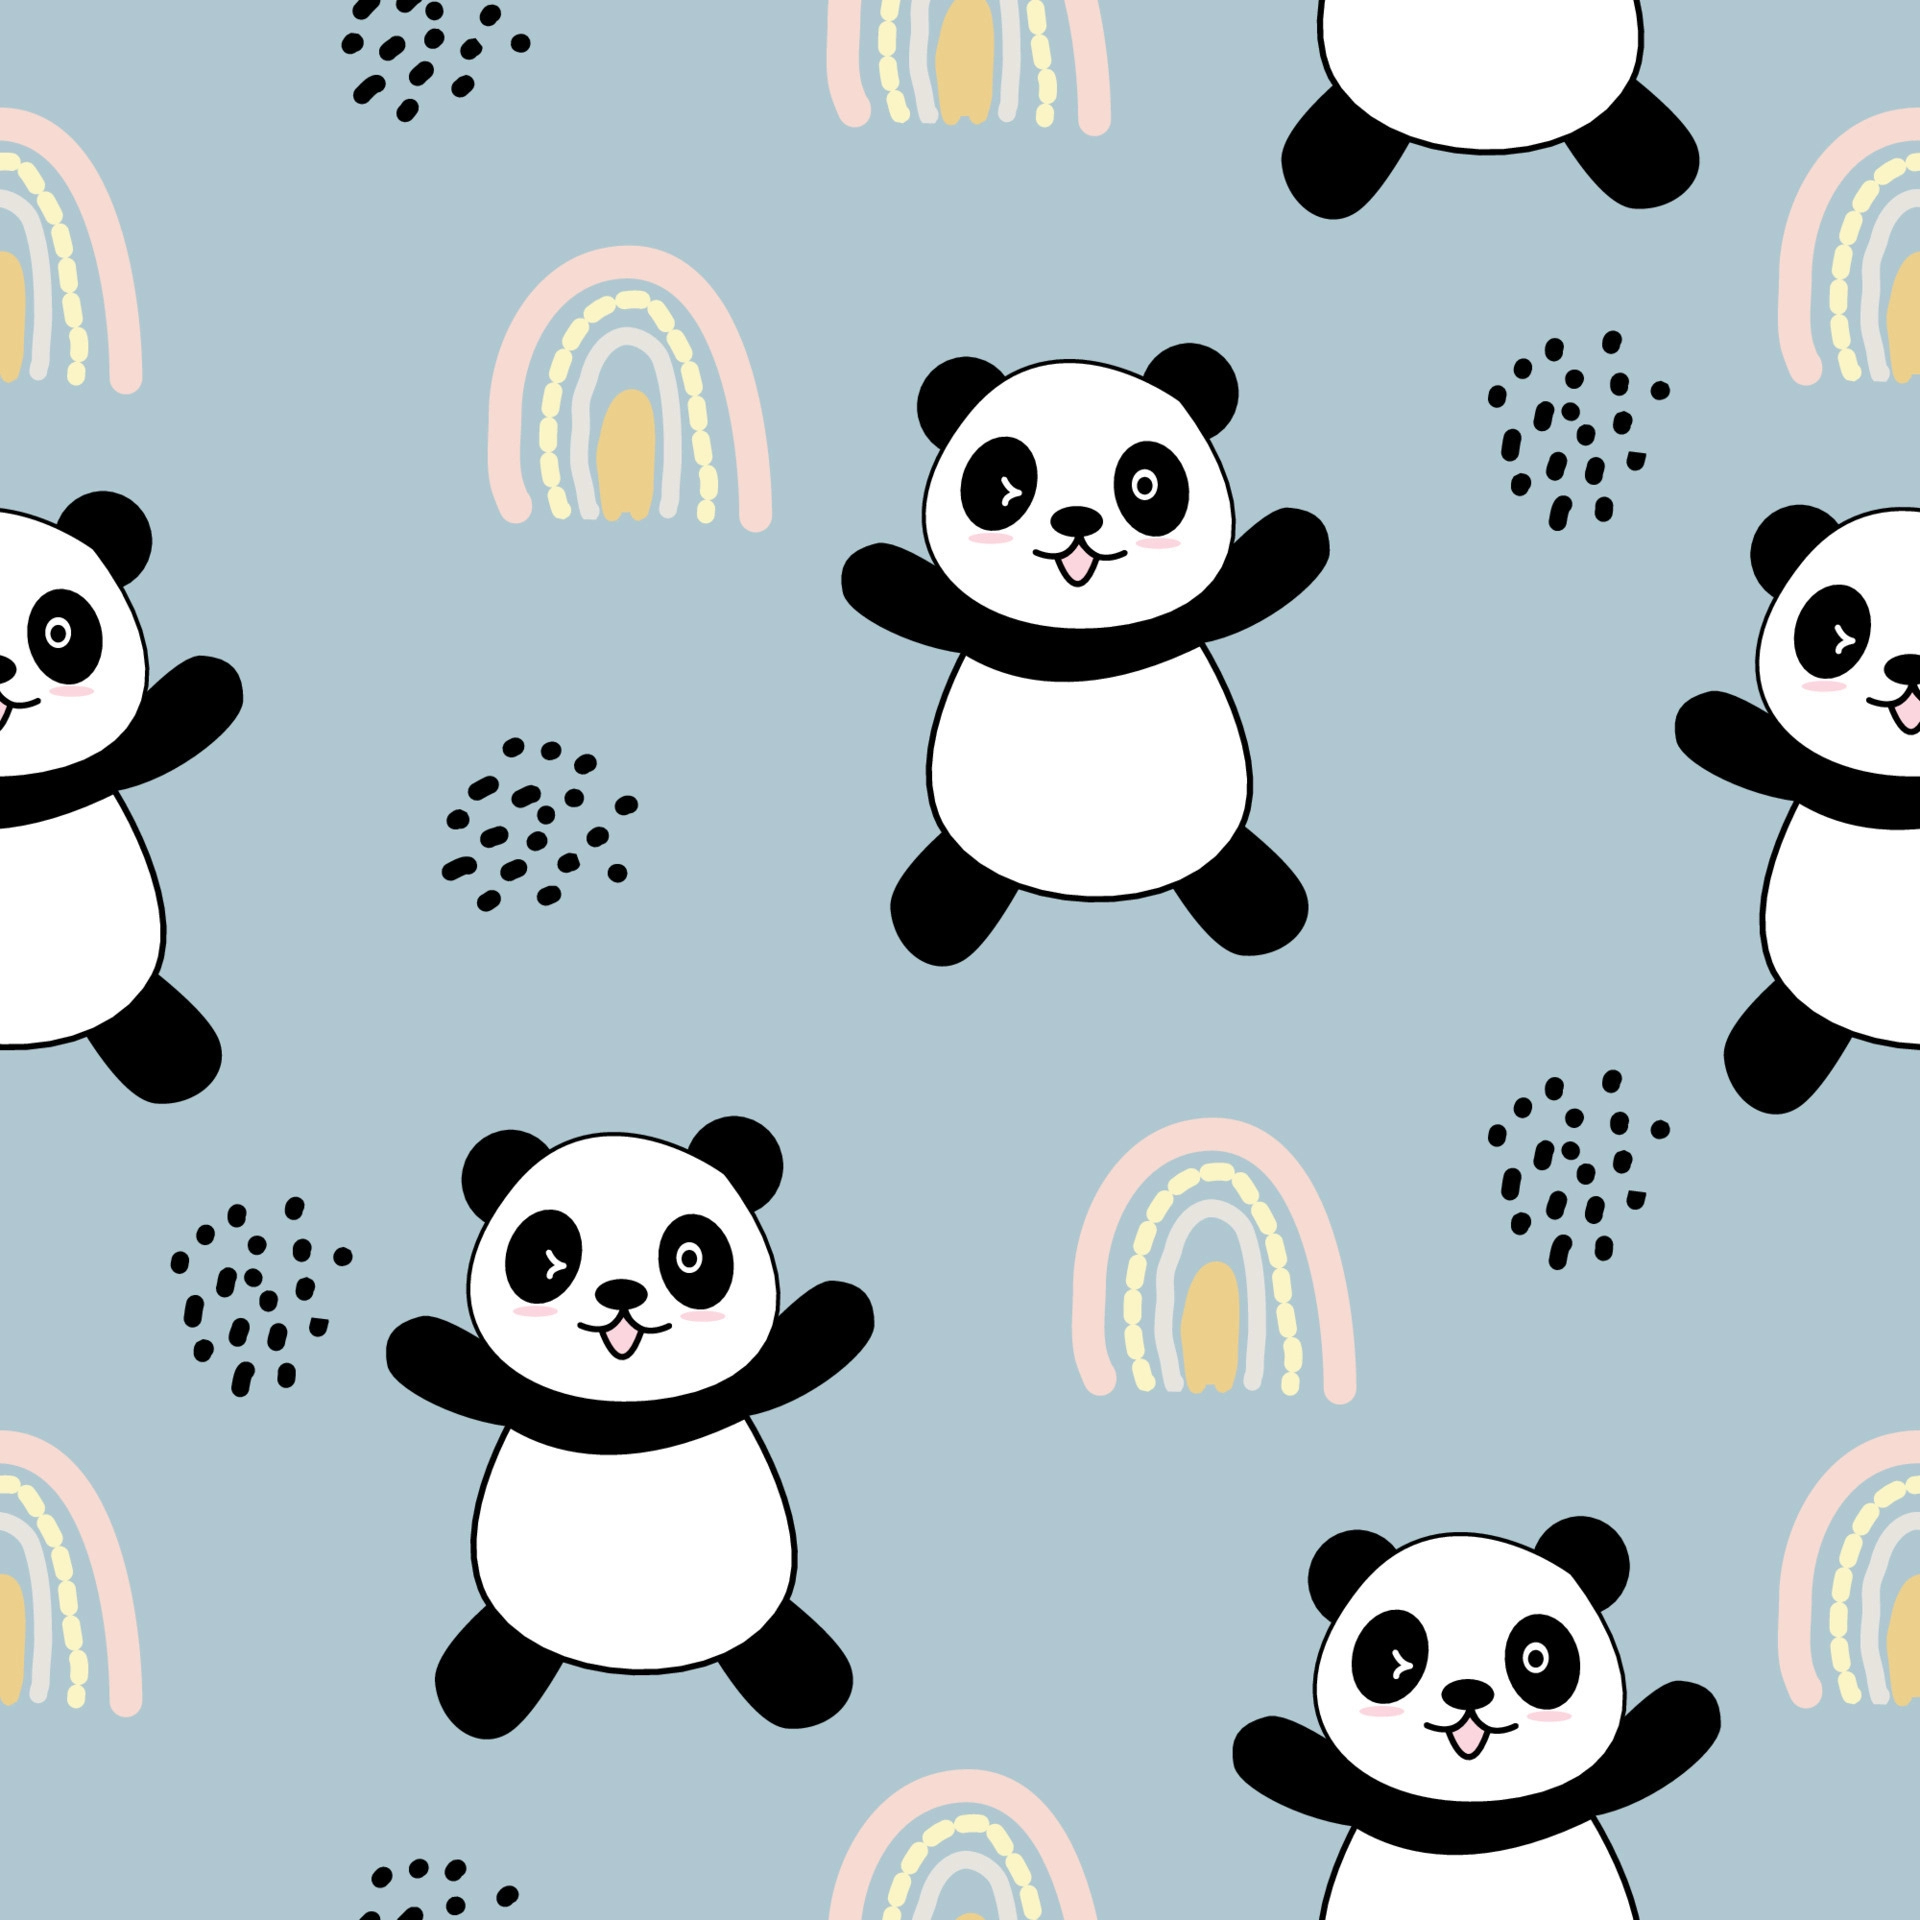 1920x1920 Cute Panda Seamless Pattern Background, Cartoon Panda Bears Vector illustration, Creative kids for fabric, wrapping, textile, wallpaper, apparel. 7888292 Vector Art